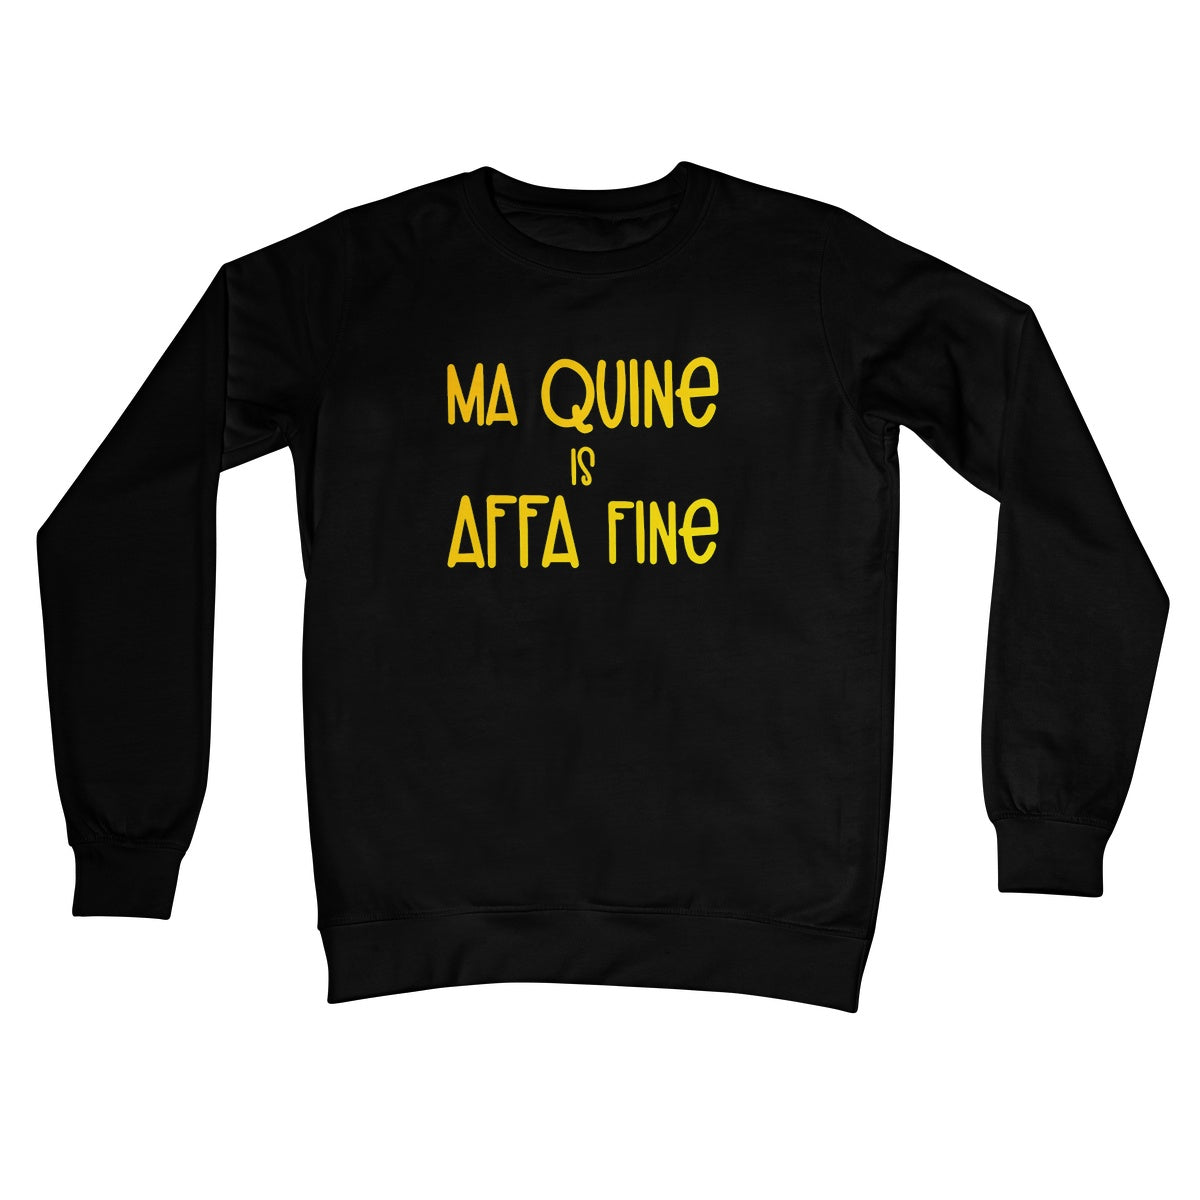 Doric Scots "Ma Quine is Affa Fine" Crew Neck Sweatshirt